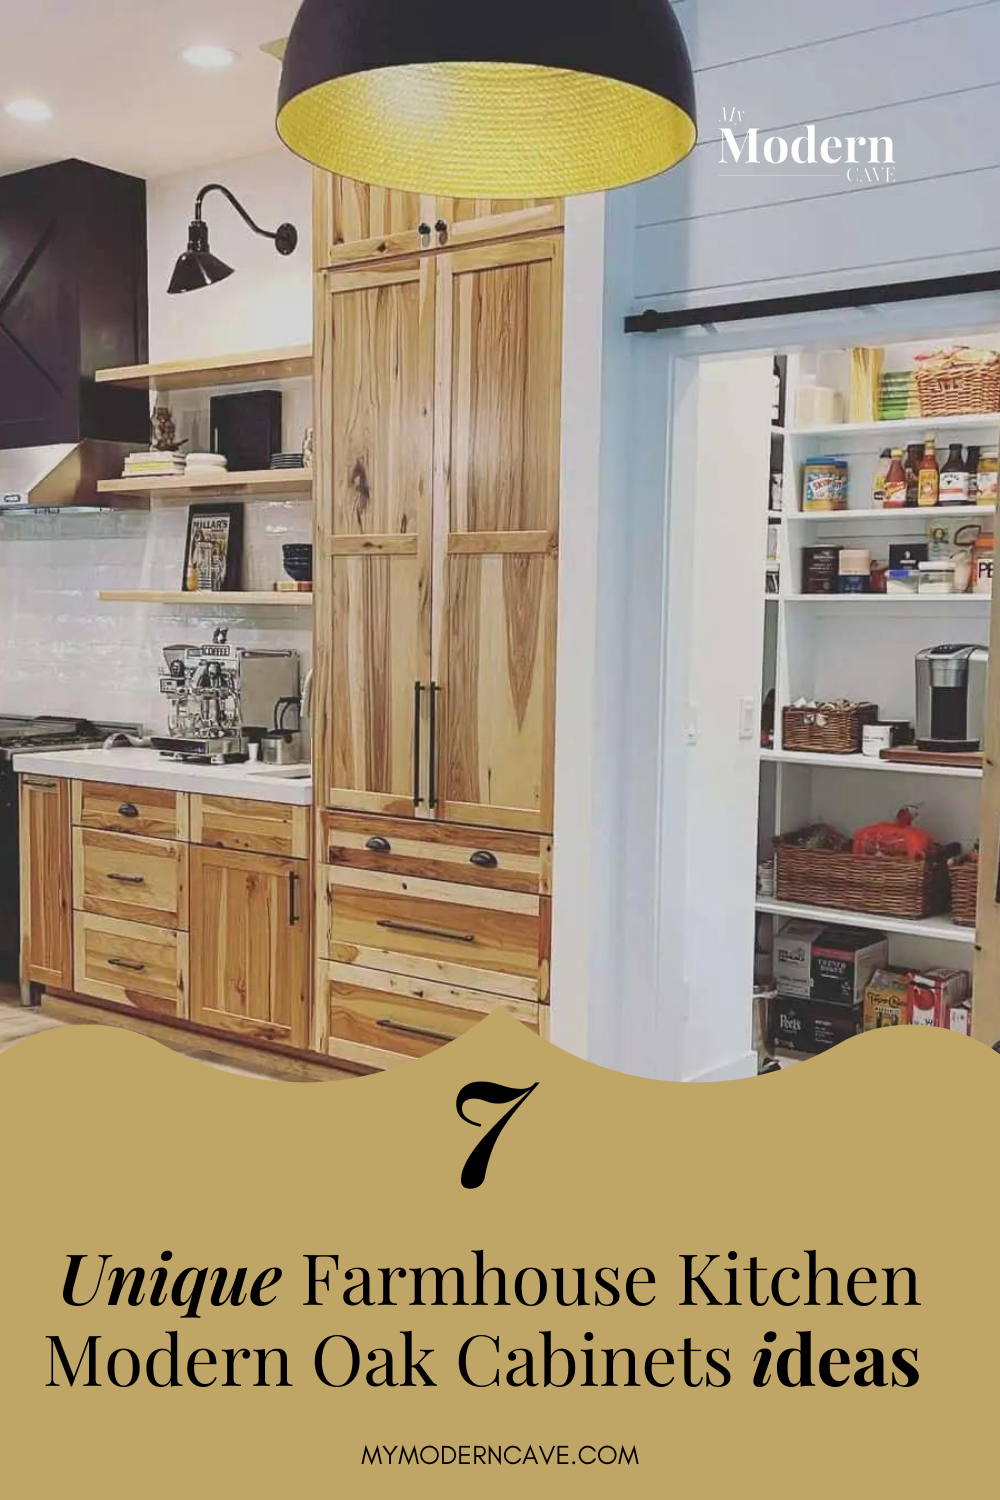 infographic on modern farmhouse kitchen ideas oak cabinets